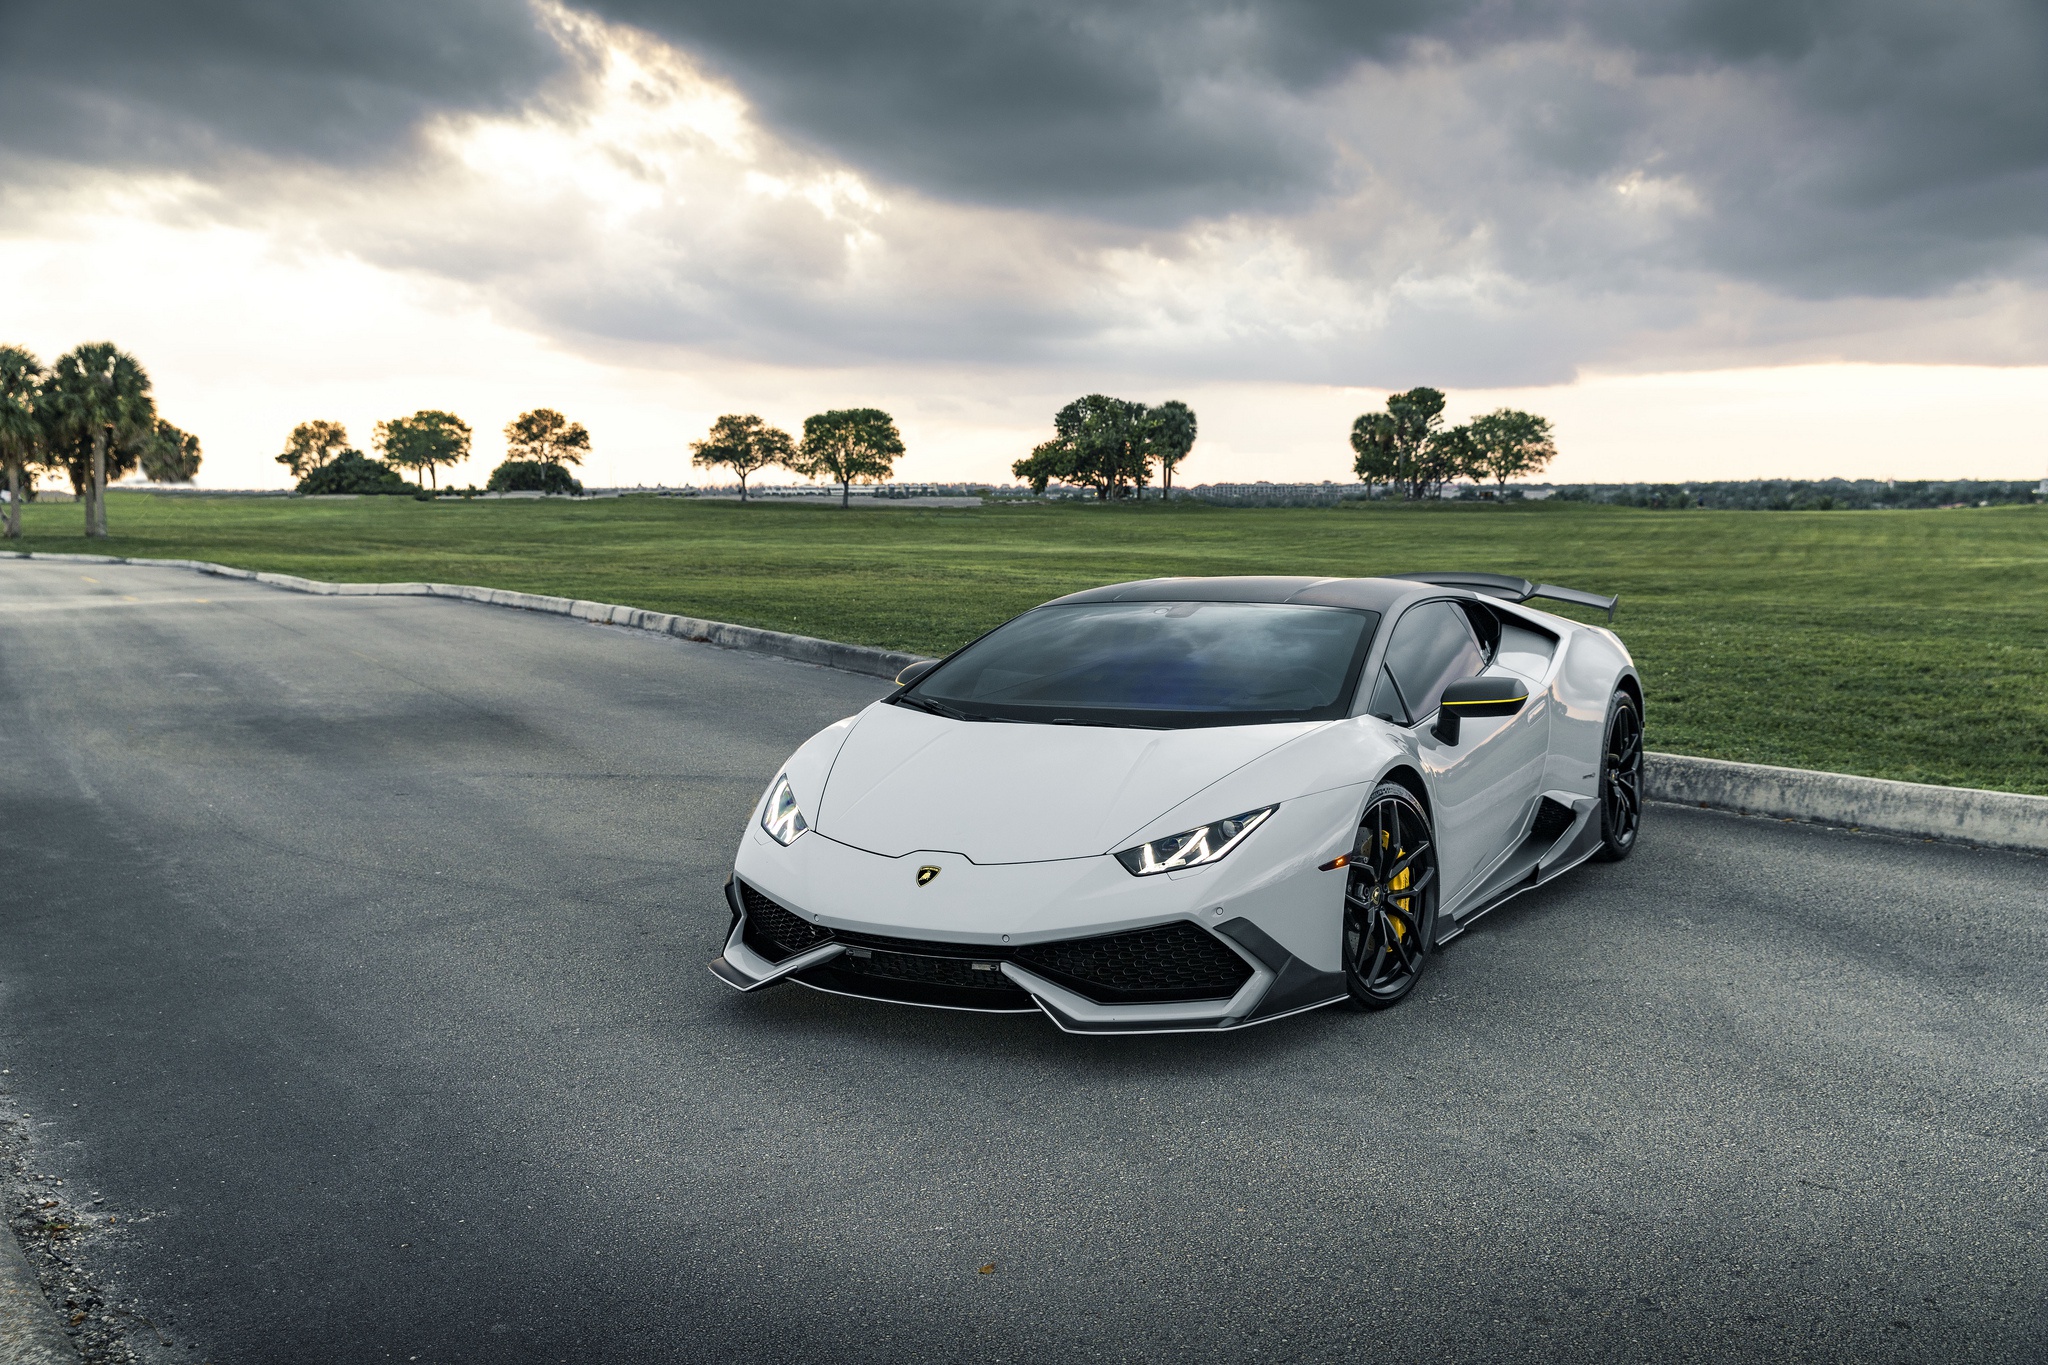 Baixe gratuitamente a imagem Lamborghini, Carro, Veículos, Carro Branco, Lamborghini Huracán na área de trabalho do seu PC